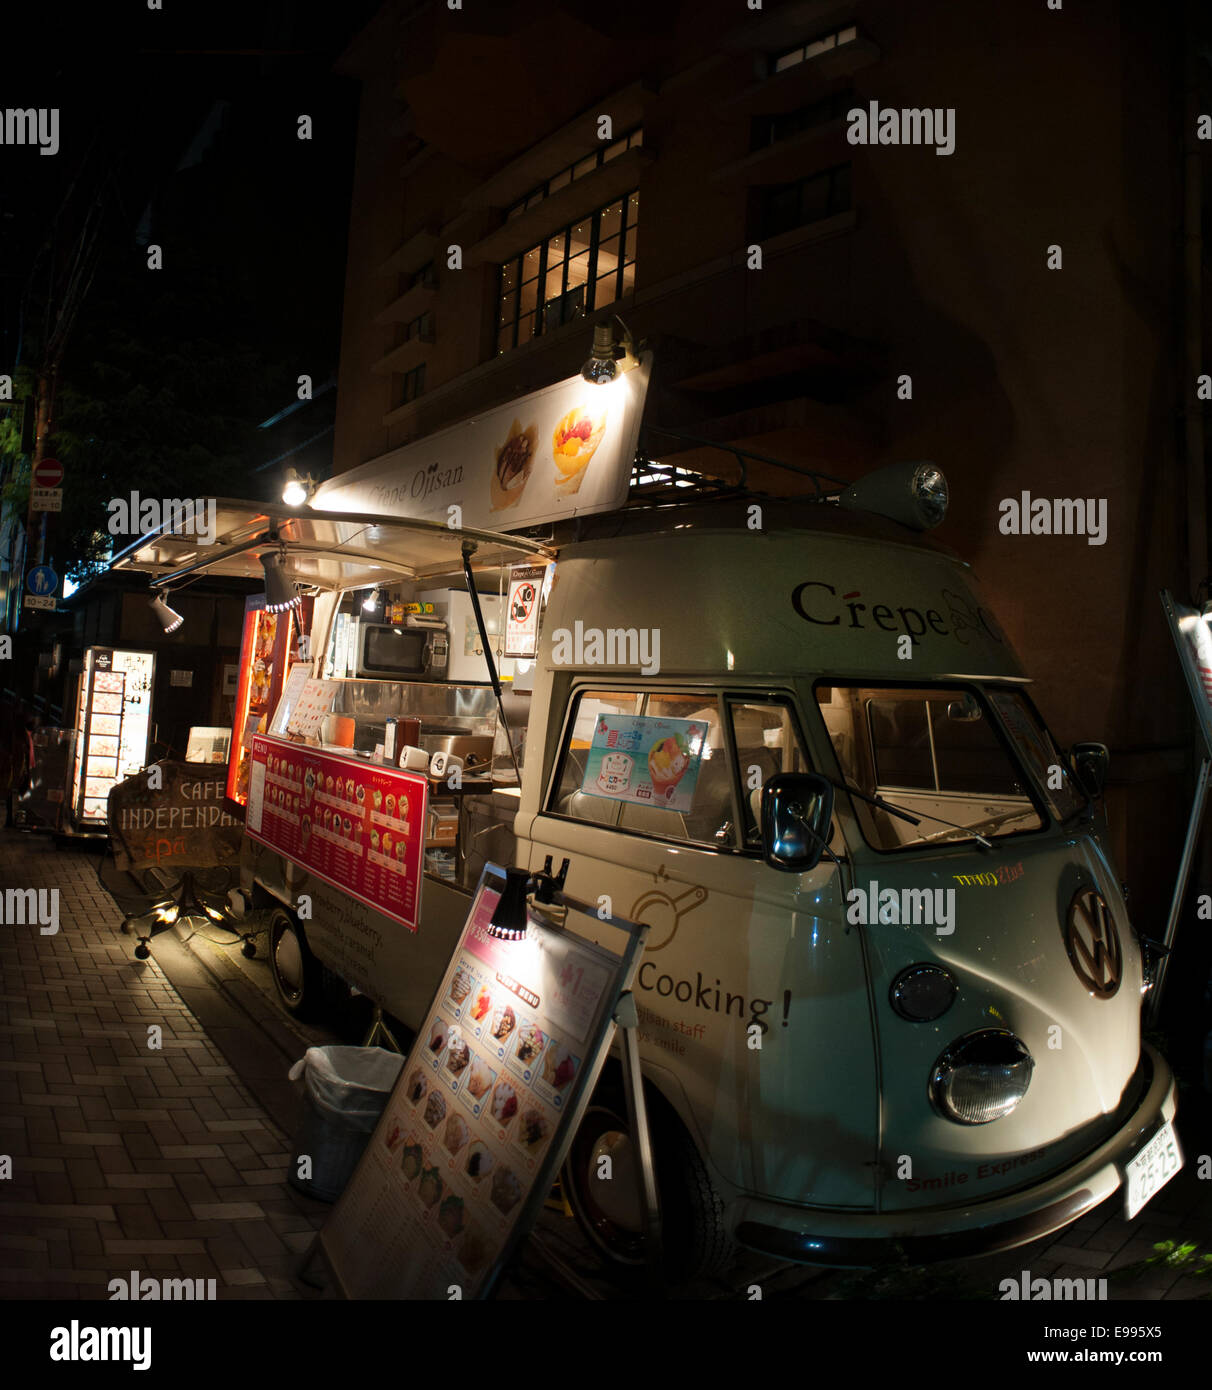 Crepes mobile van take away, Kyoto, Japan. Stock Photo